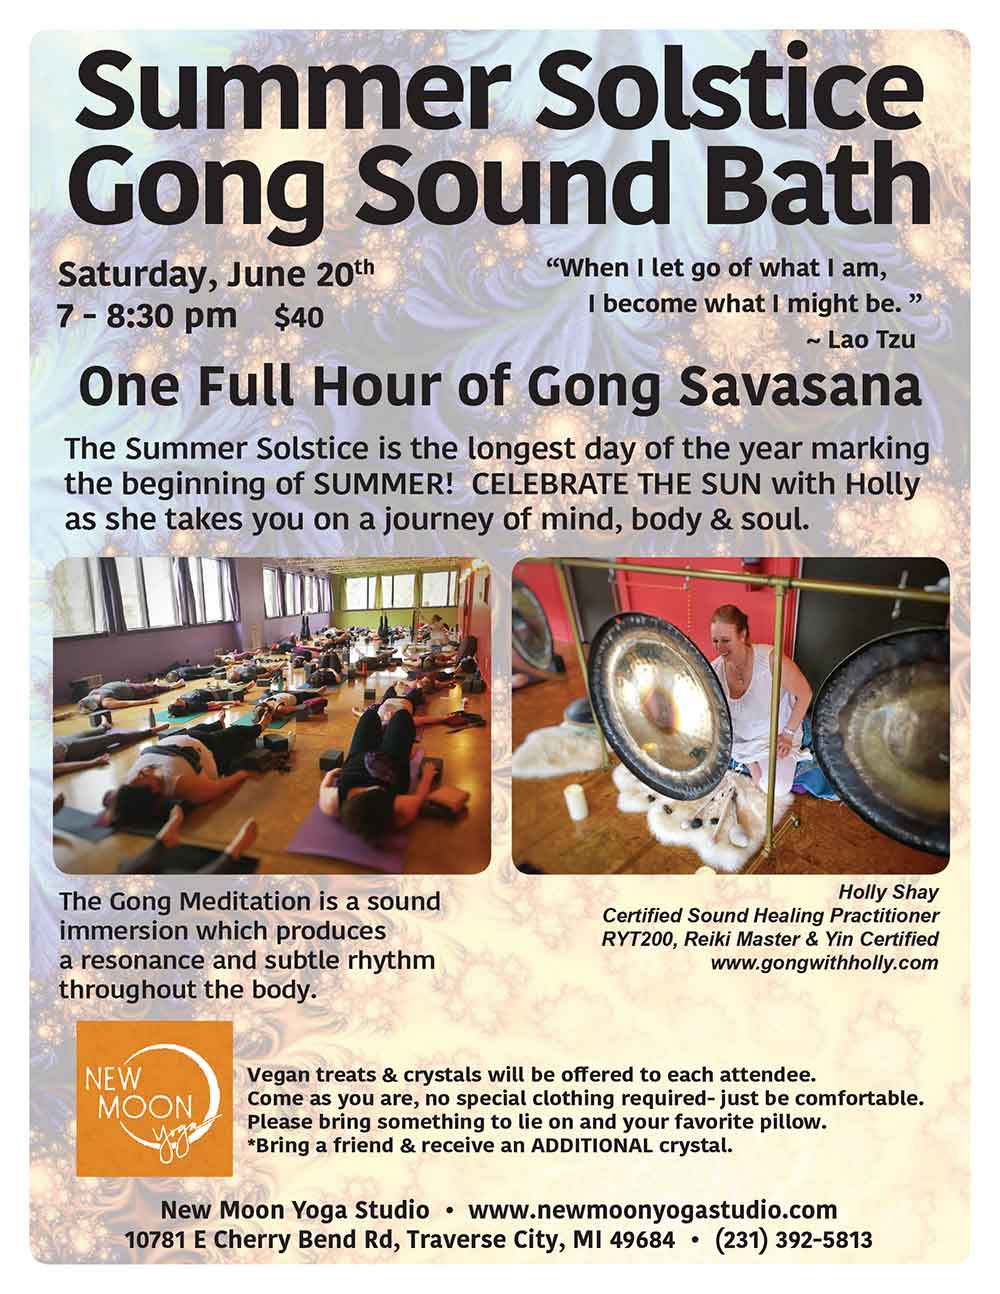 Gong Sound bath ~ Summer Solstice - June 20 - 7 - 8:30 pm - $40 - New Moon Yoga Studio Traverse City, MI